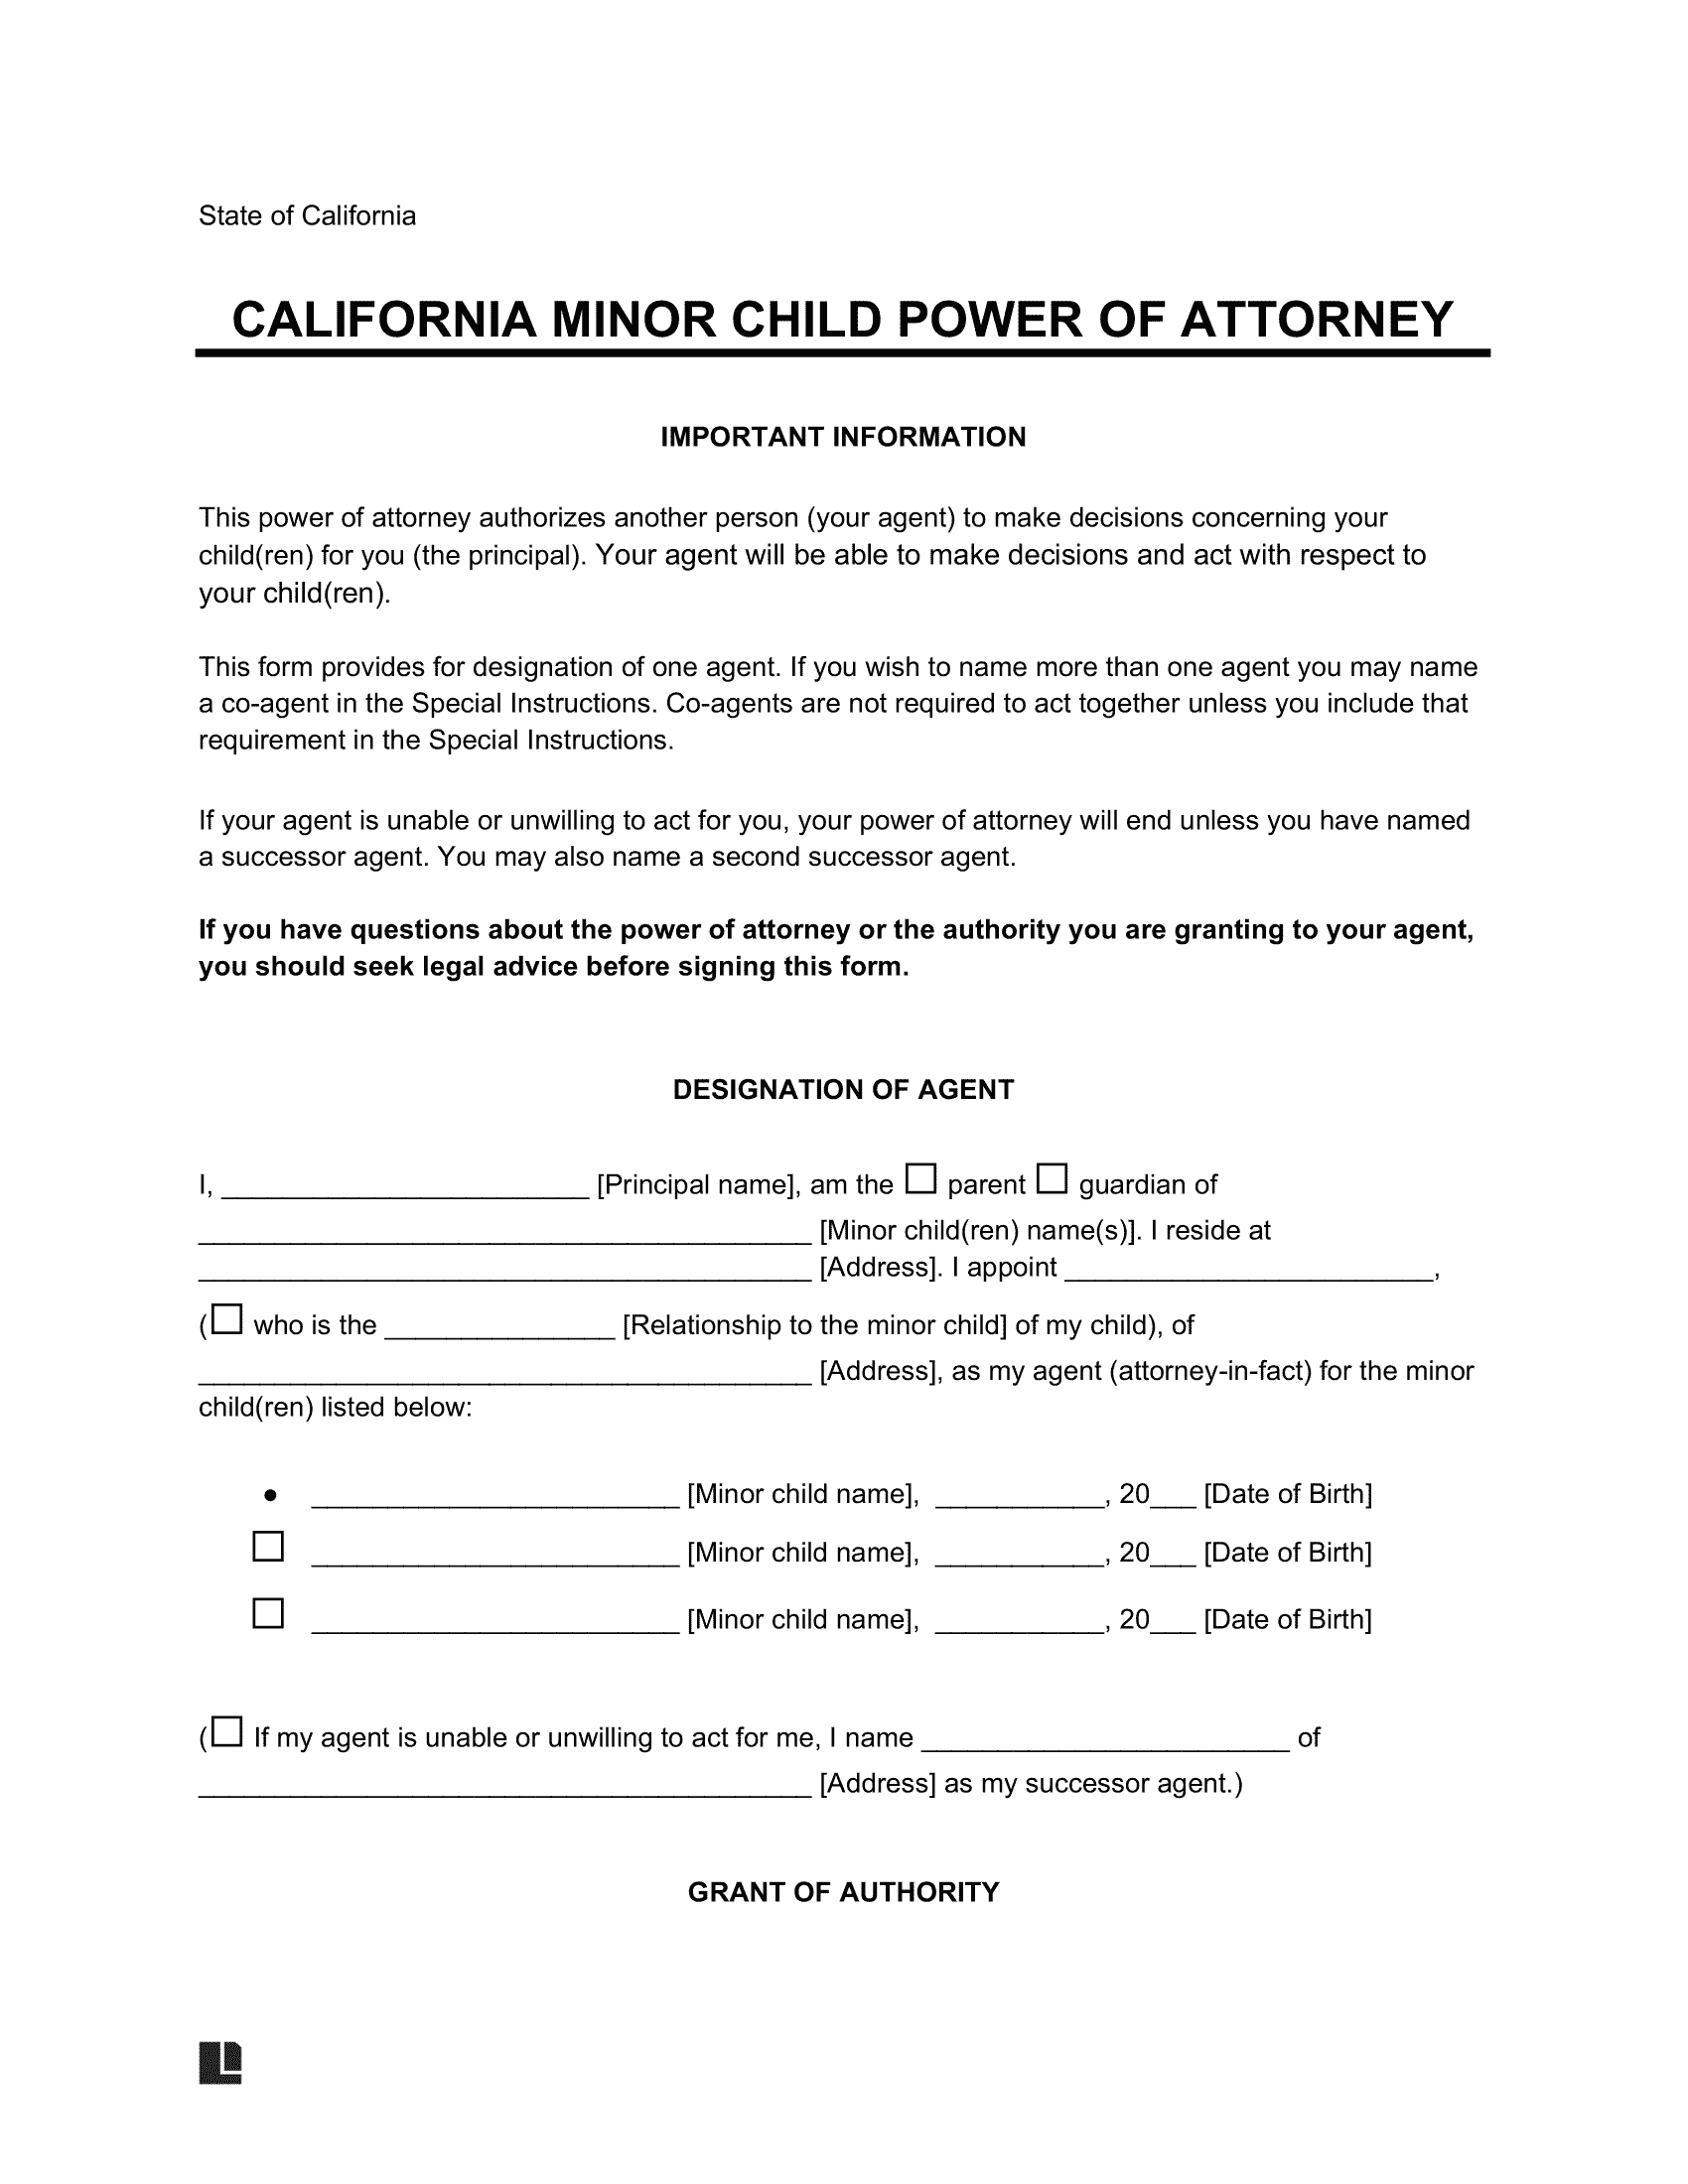 California Minor Child Power of Attorney Form